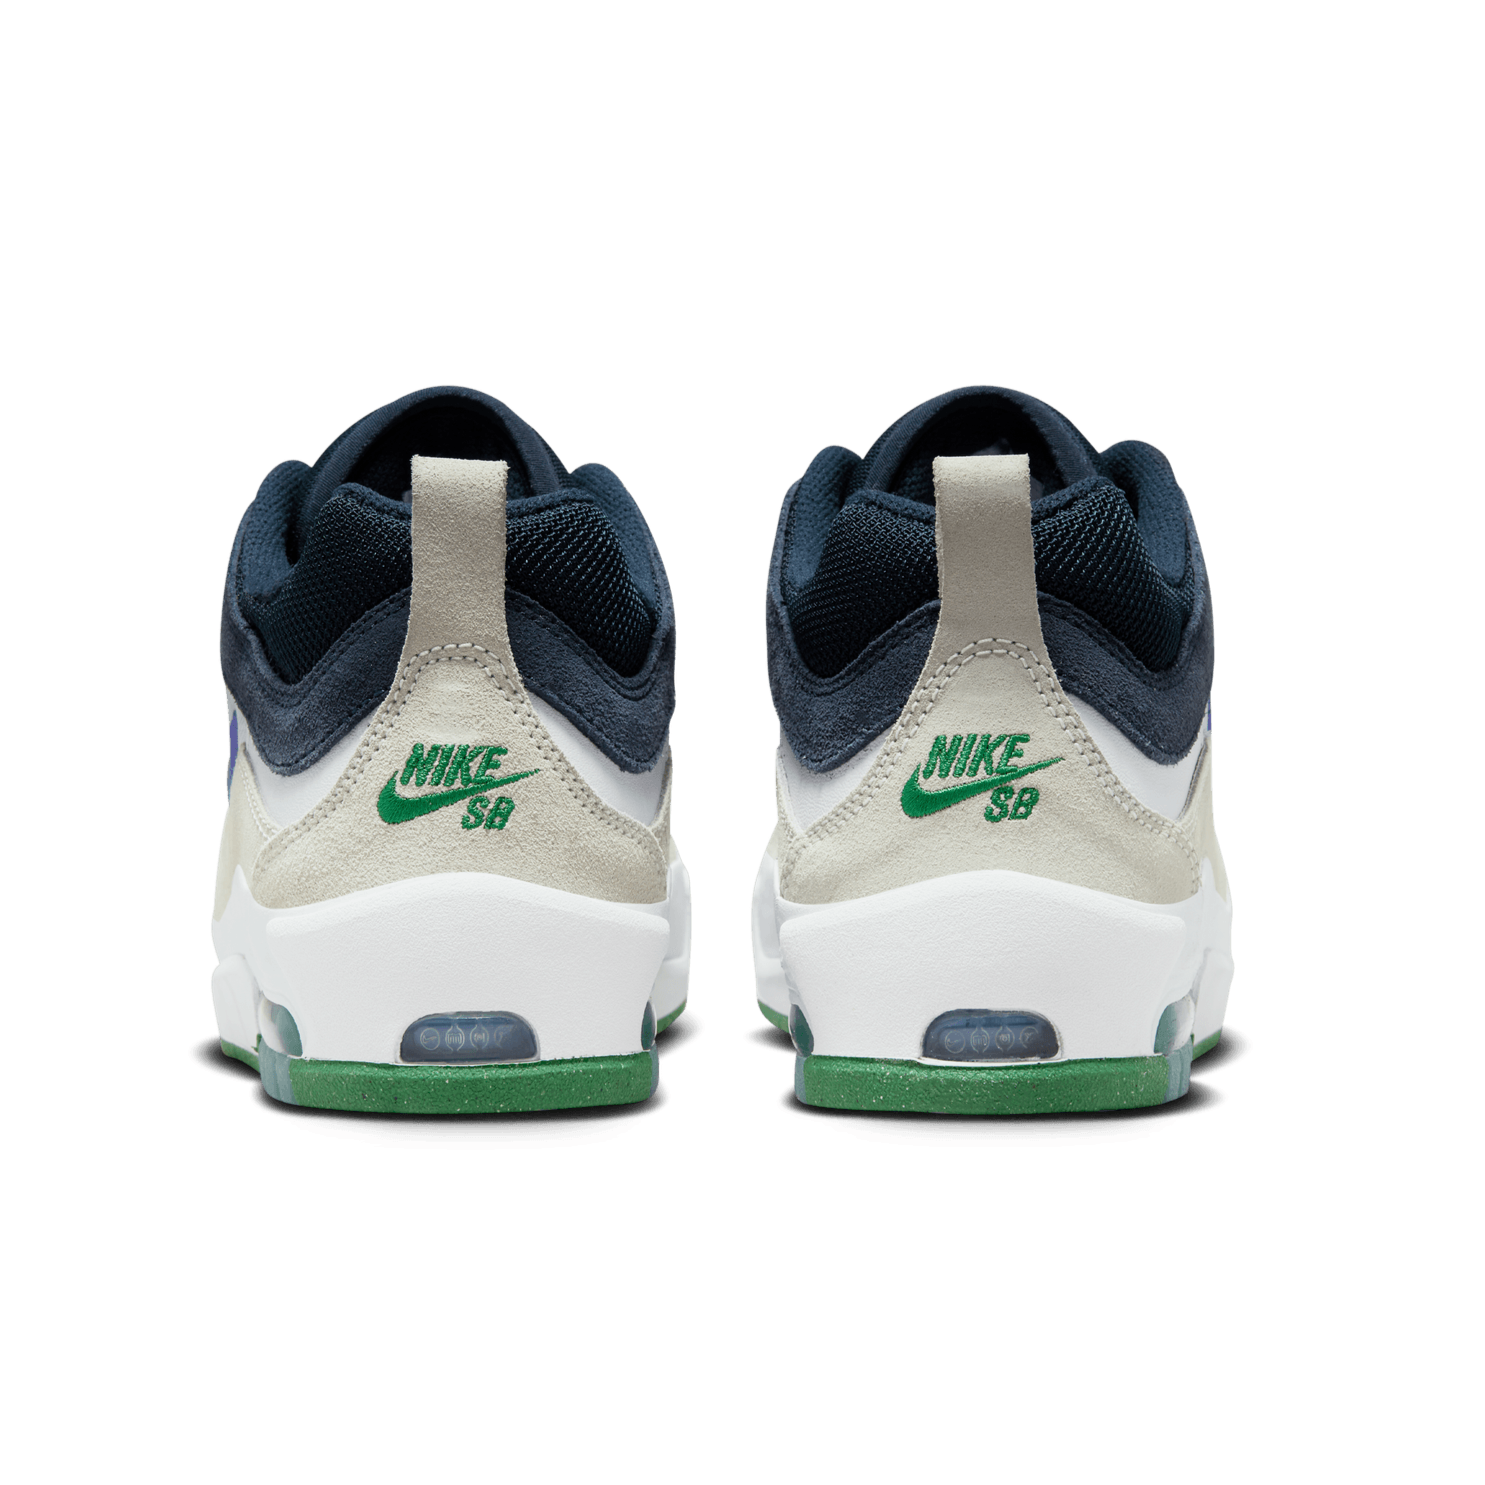 White/Obsidian Air Max Ishod Wair Nike SB Skate Shoe Back